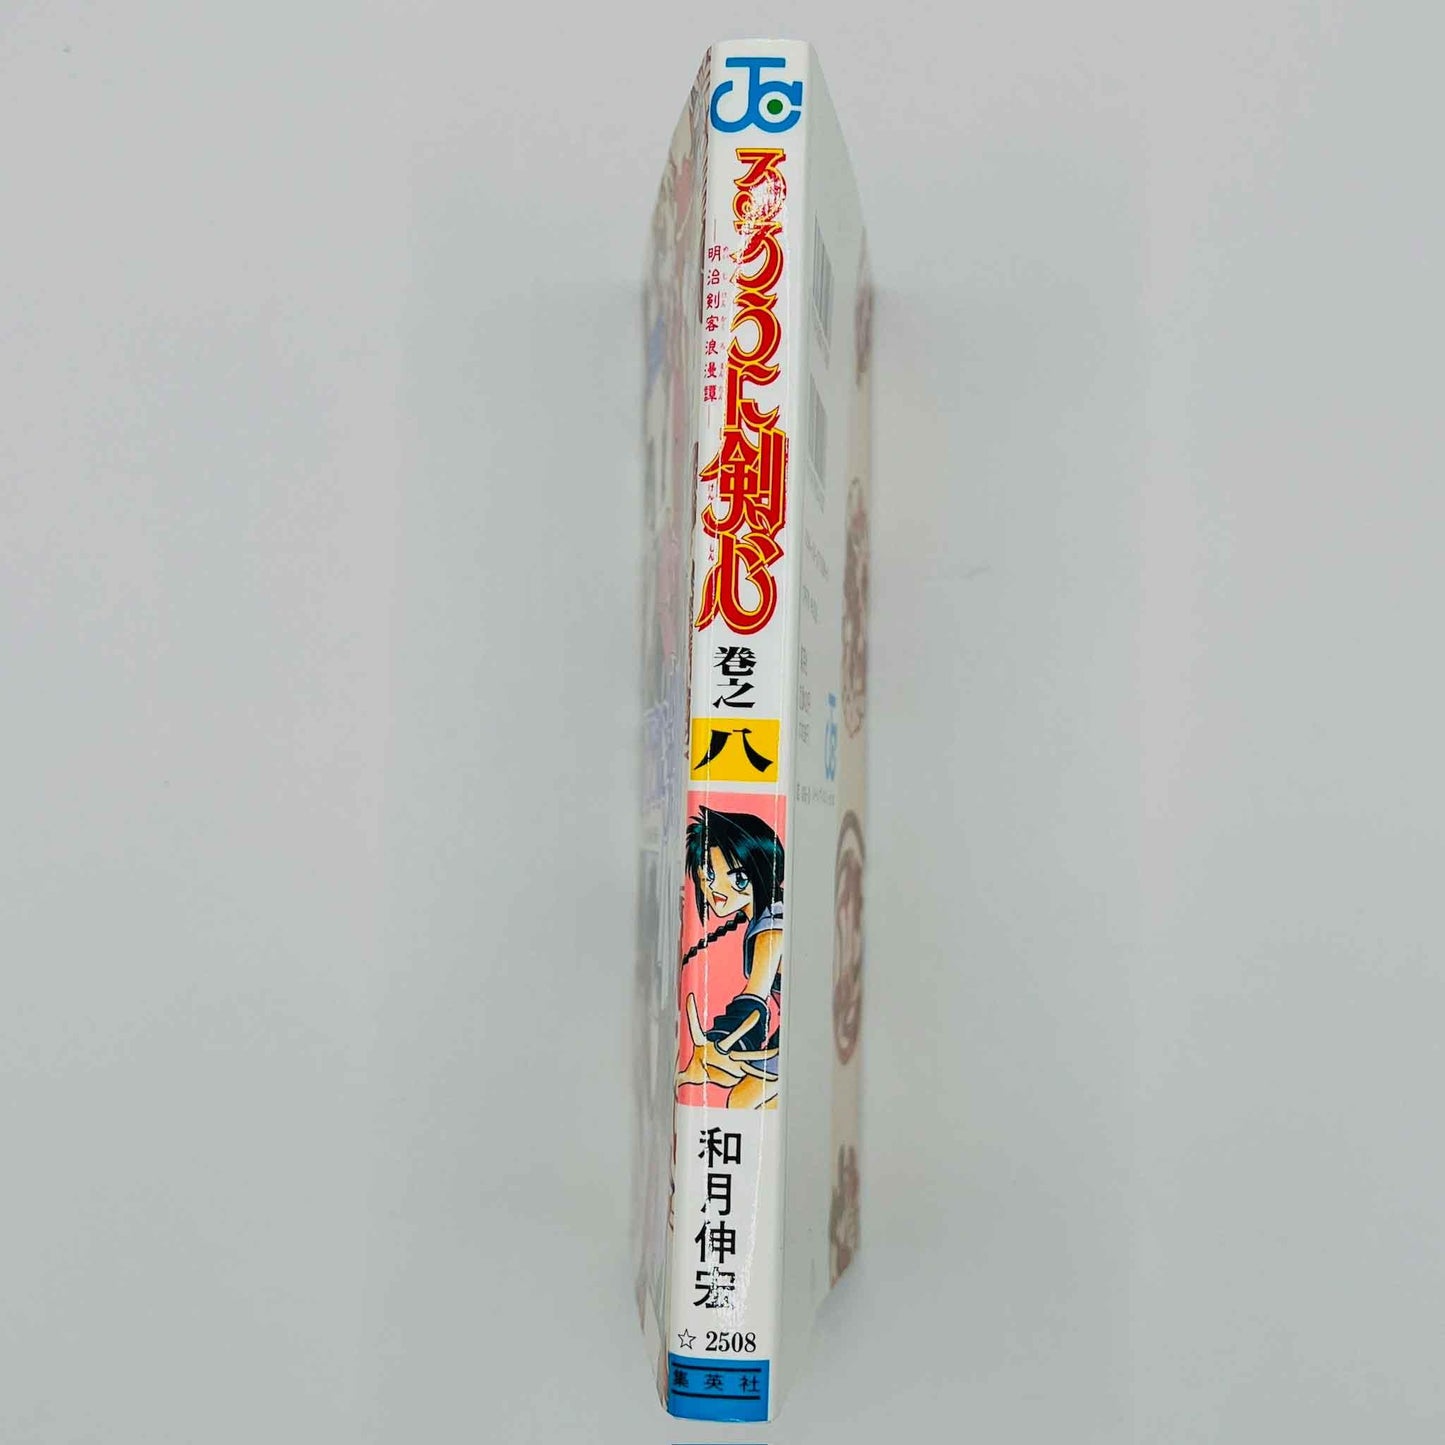 Rurouni Kenshin - Volume 08 - 1stPrint.net - 1st First Print Edition Manga Store - M-KENSH-08-001